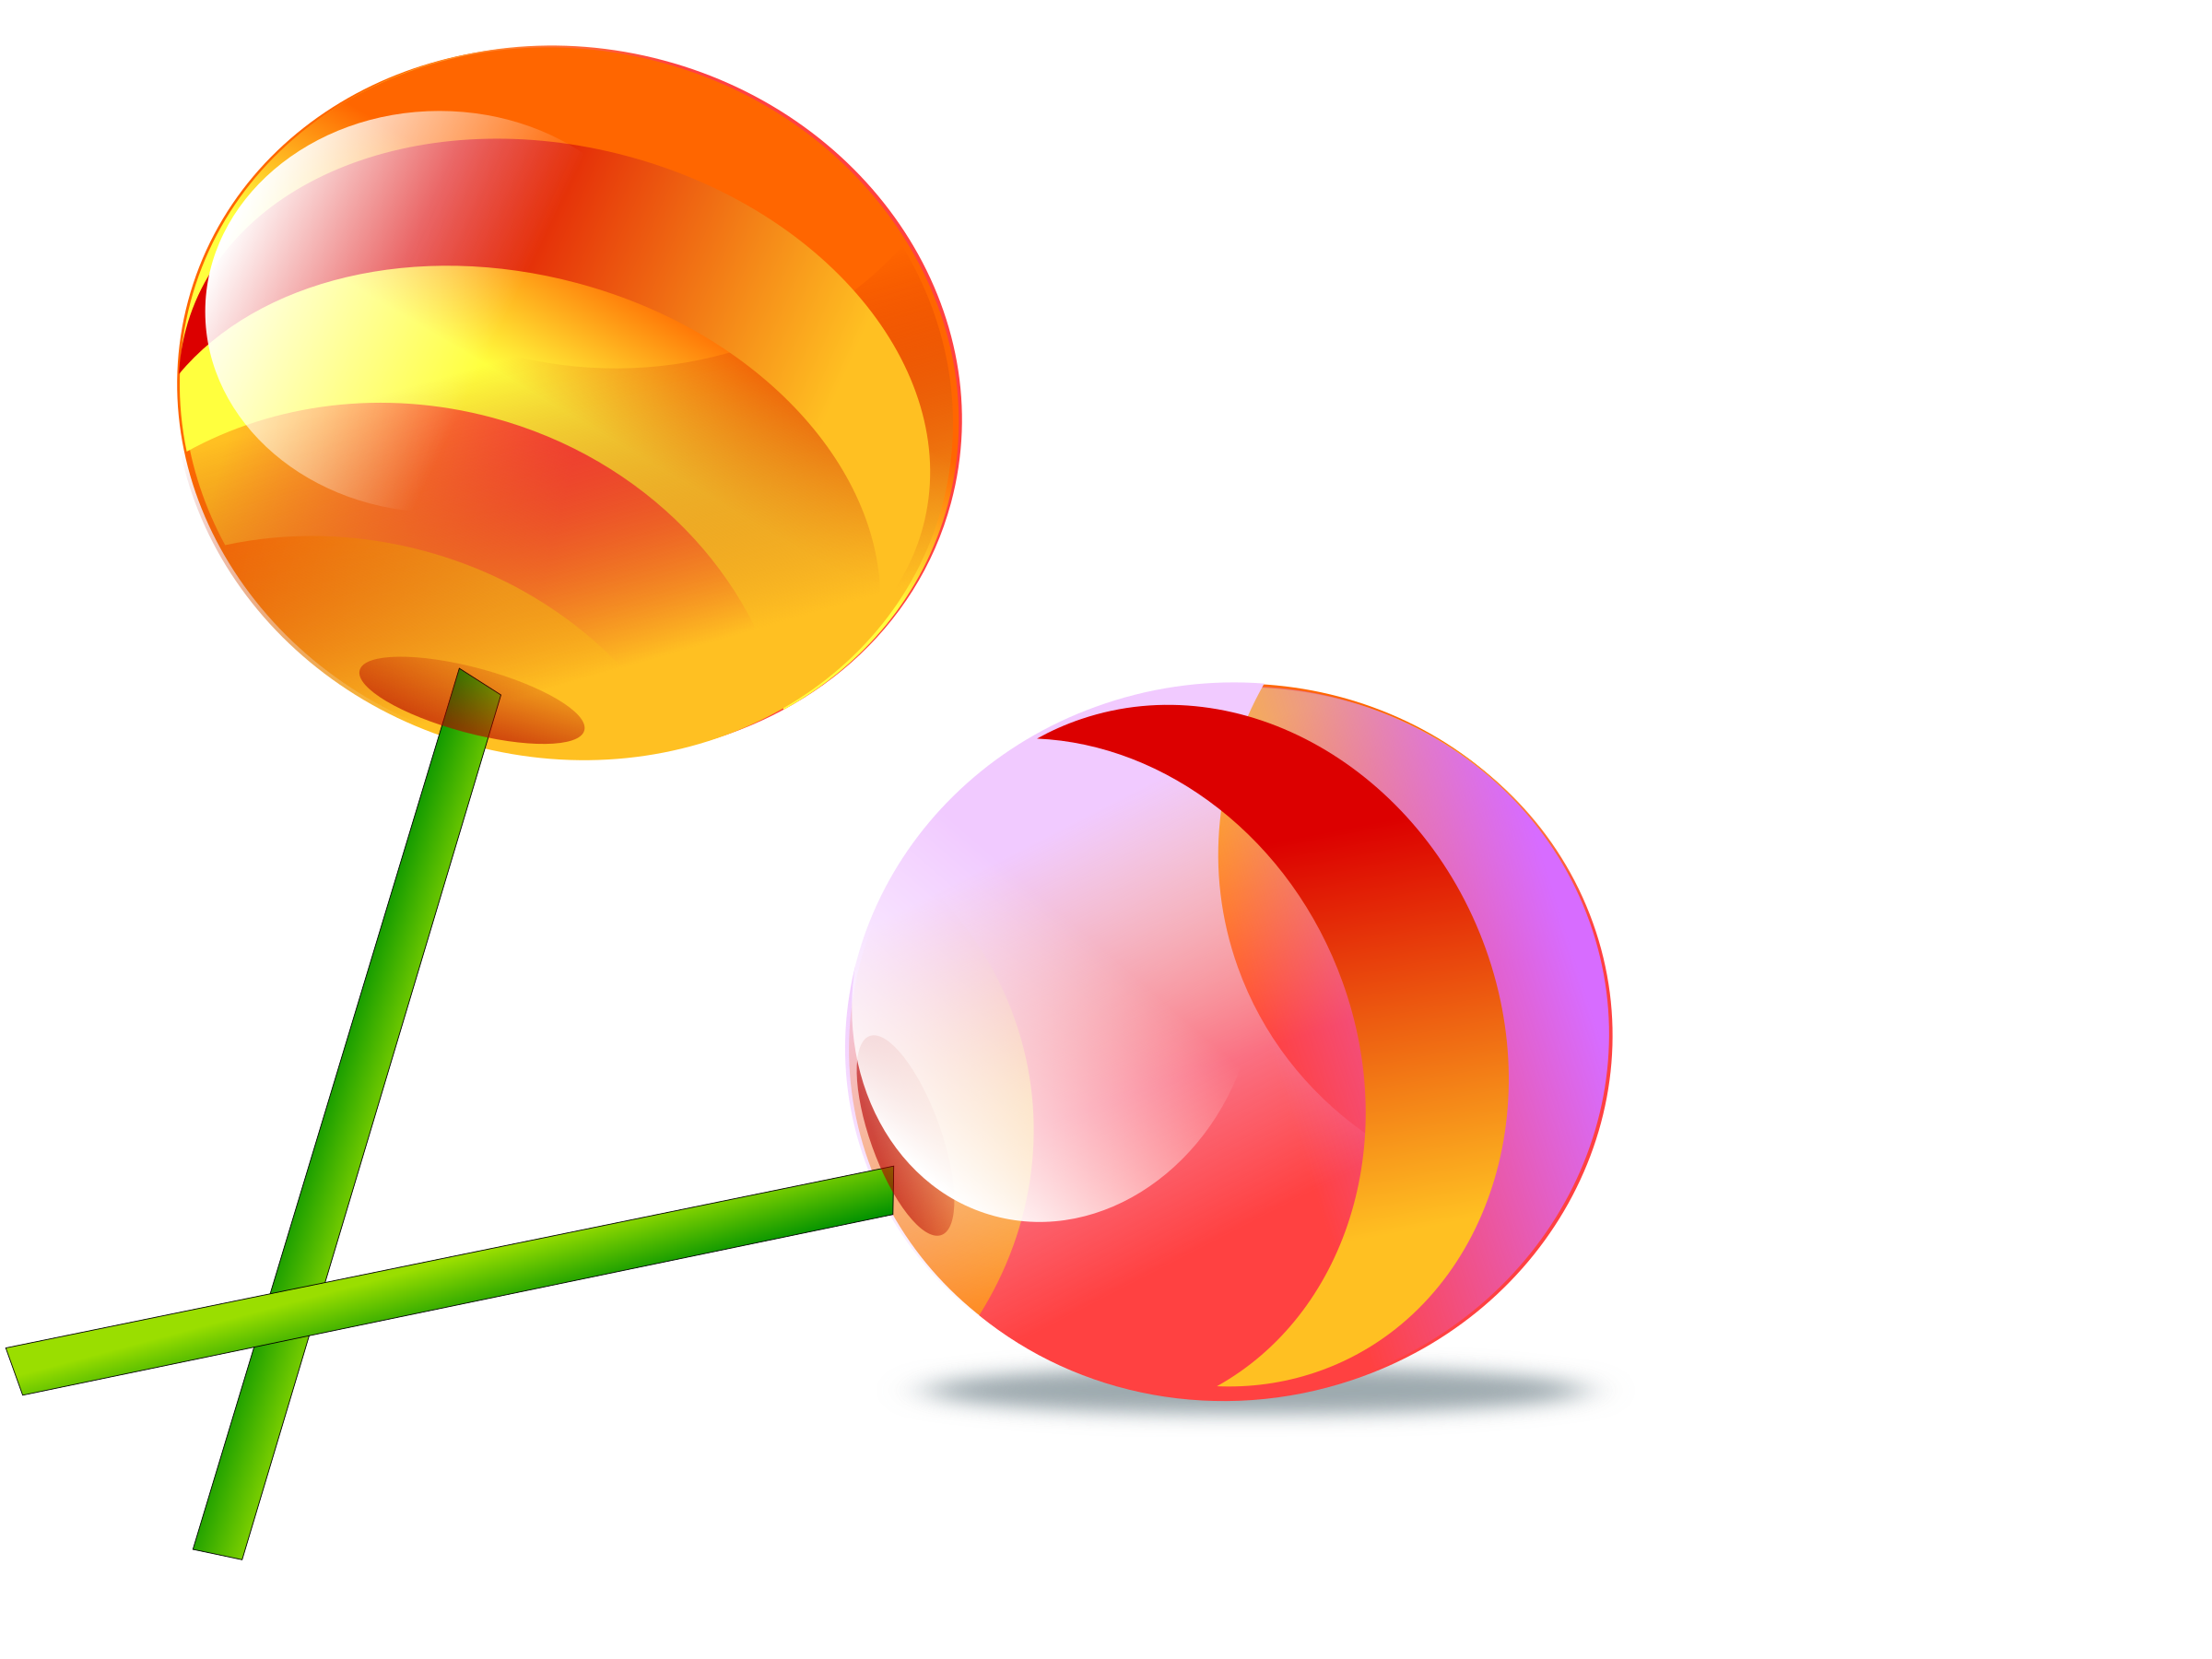 Two Lollipops vector clipart image - Free stock photo - Public Domain